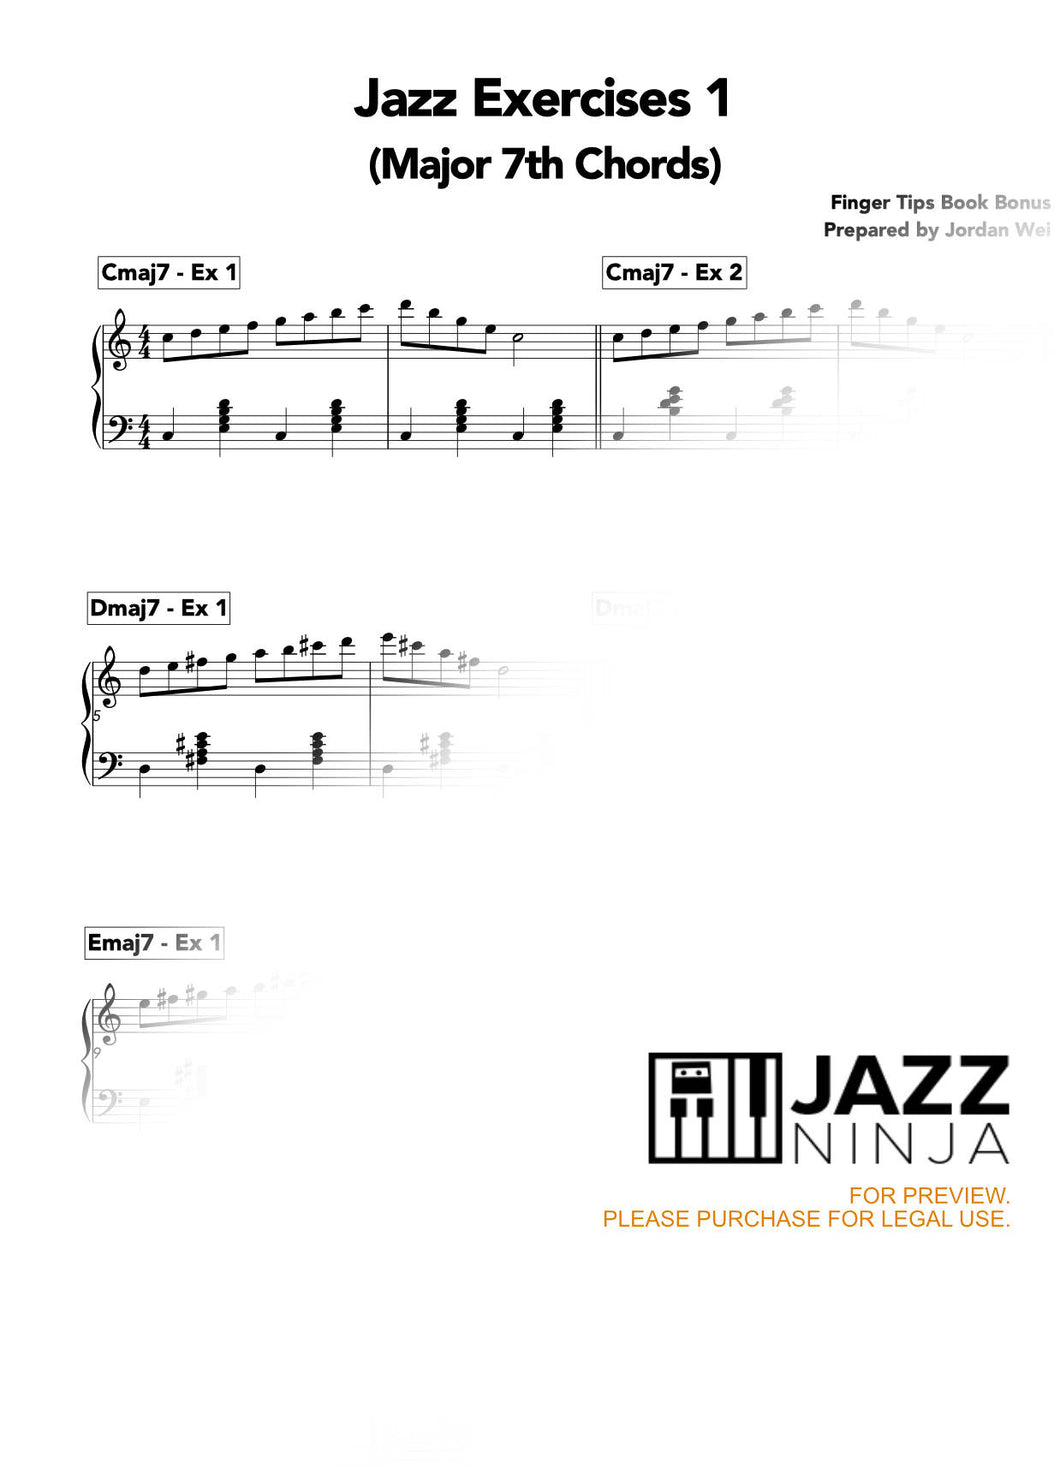 Jazz Exercises 1 (major 7th chords)